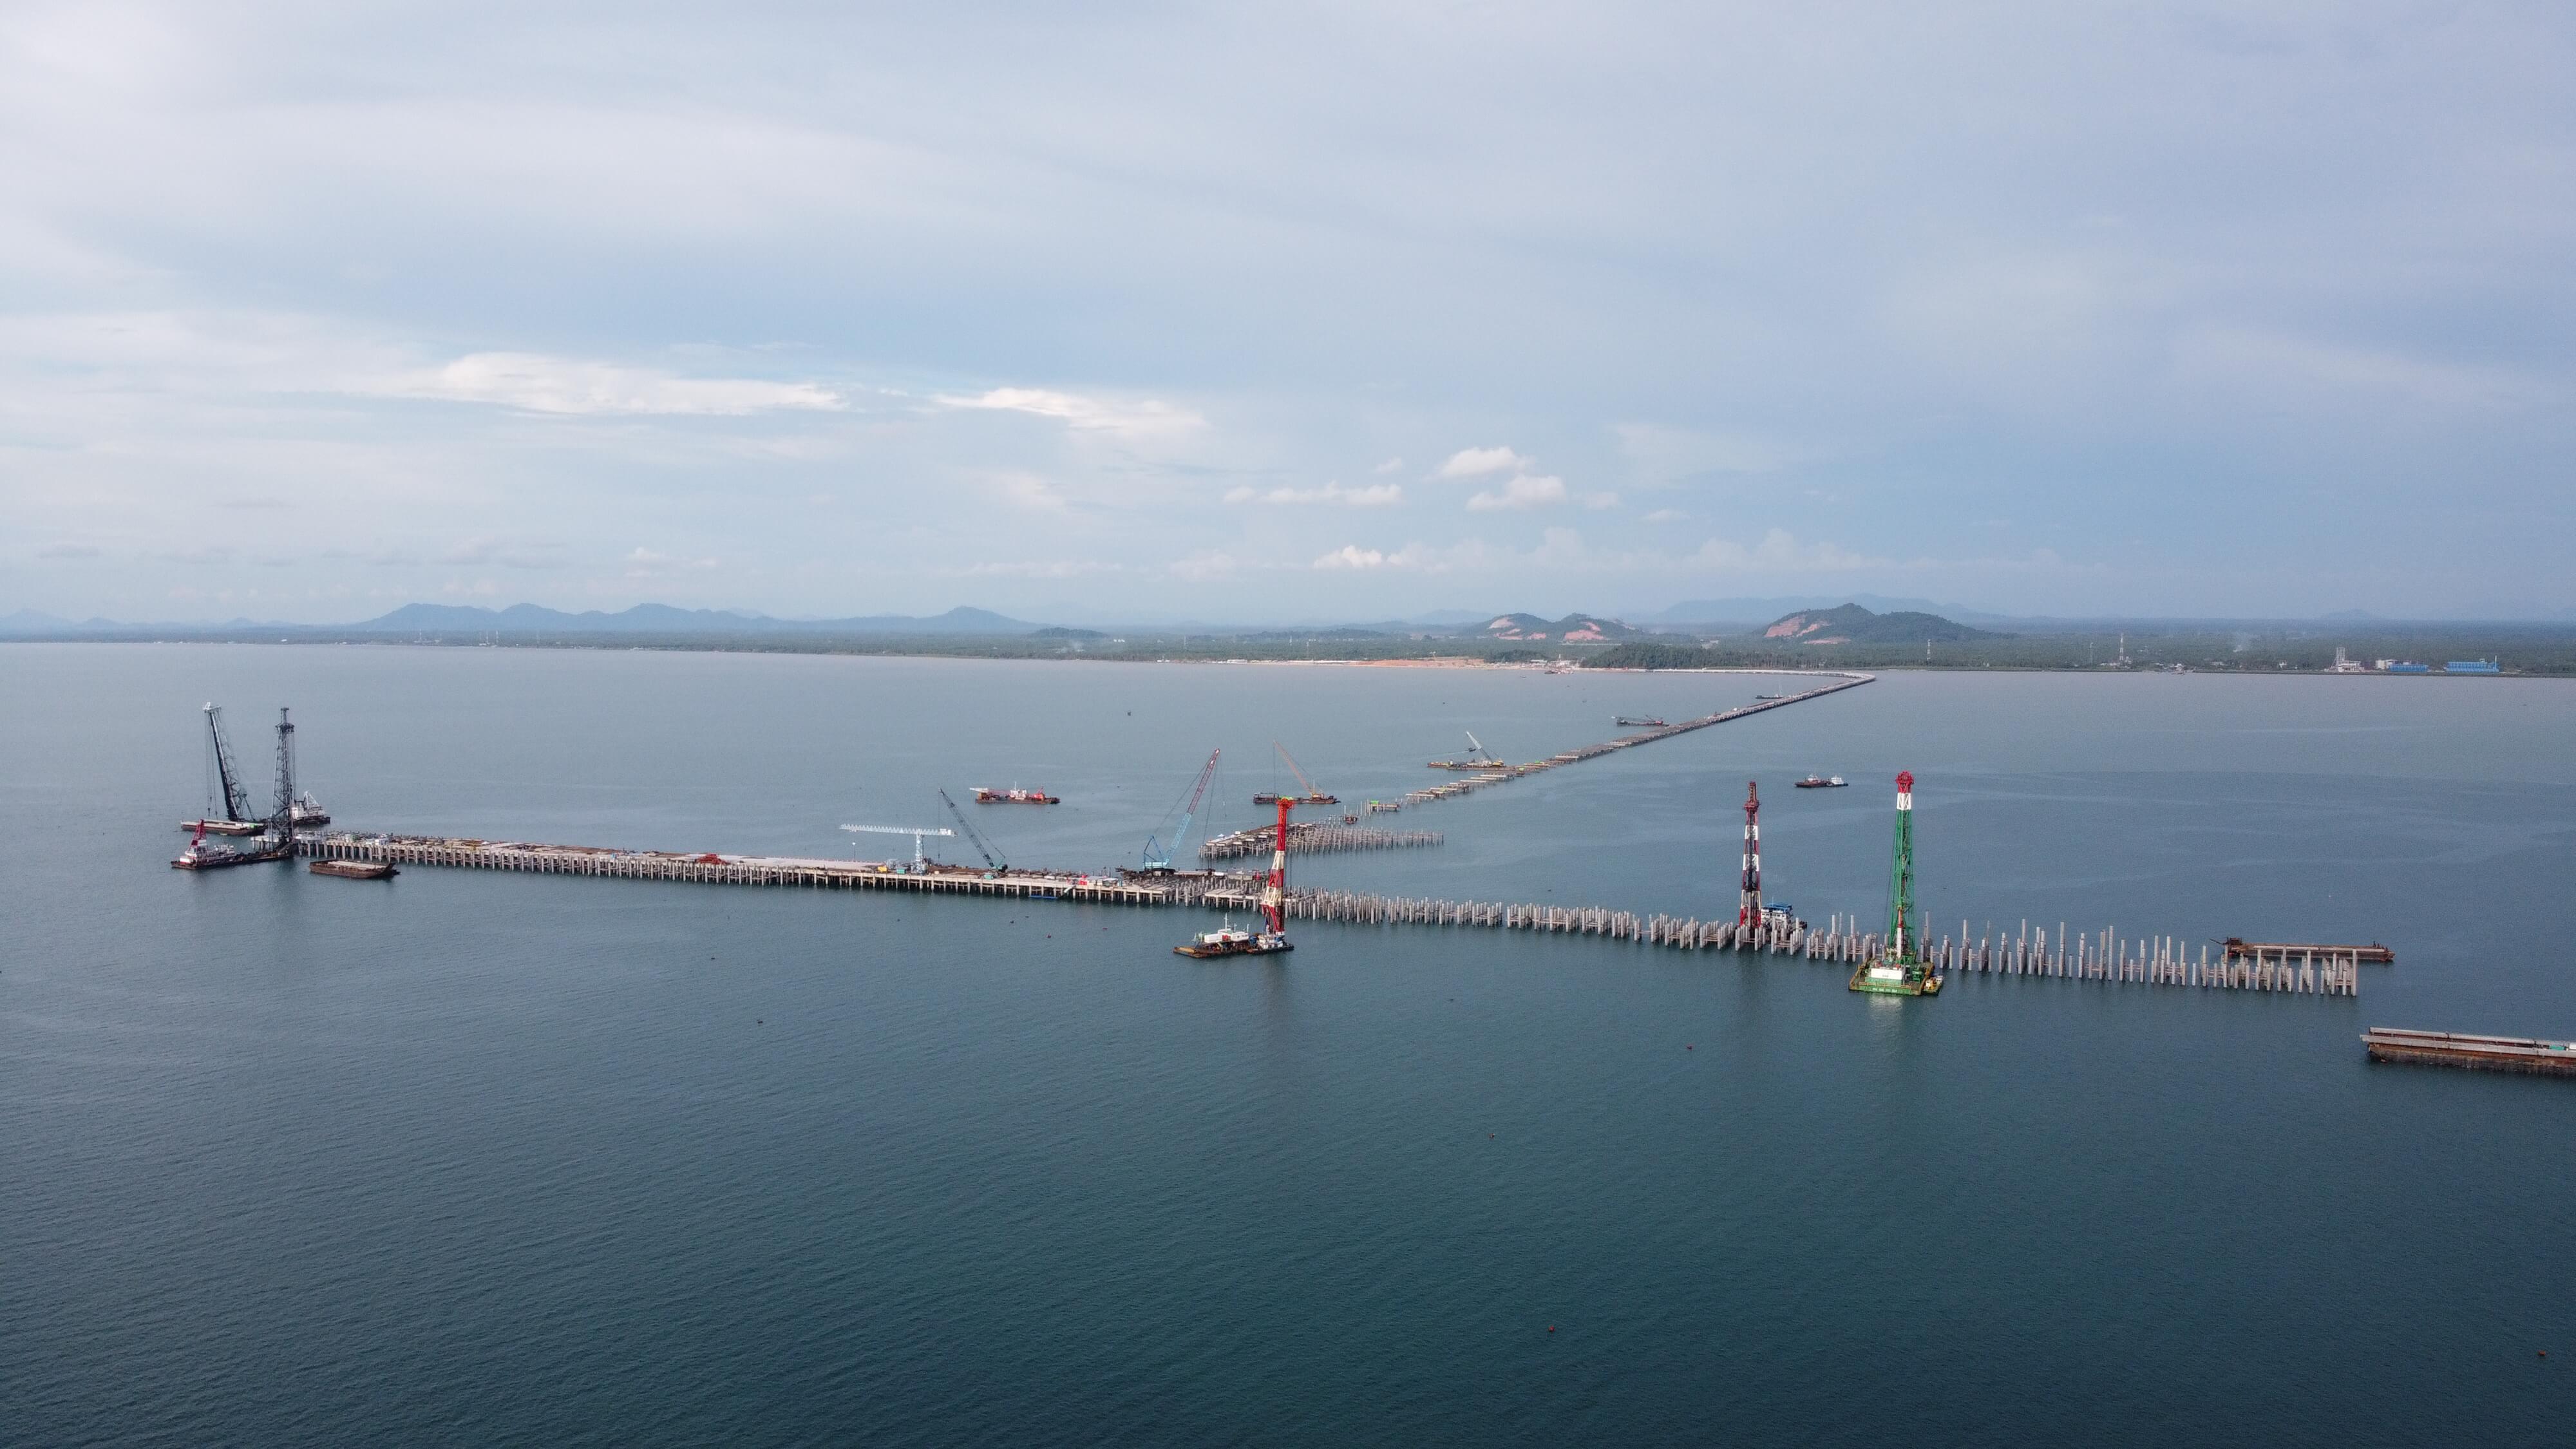 Kijing Port Construction in April 2020